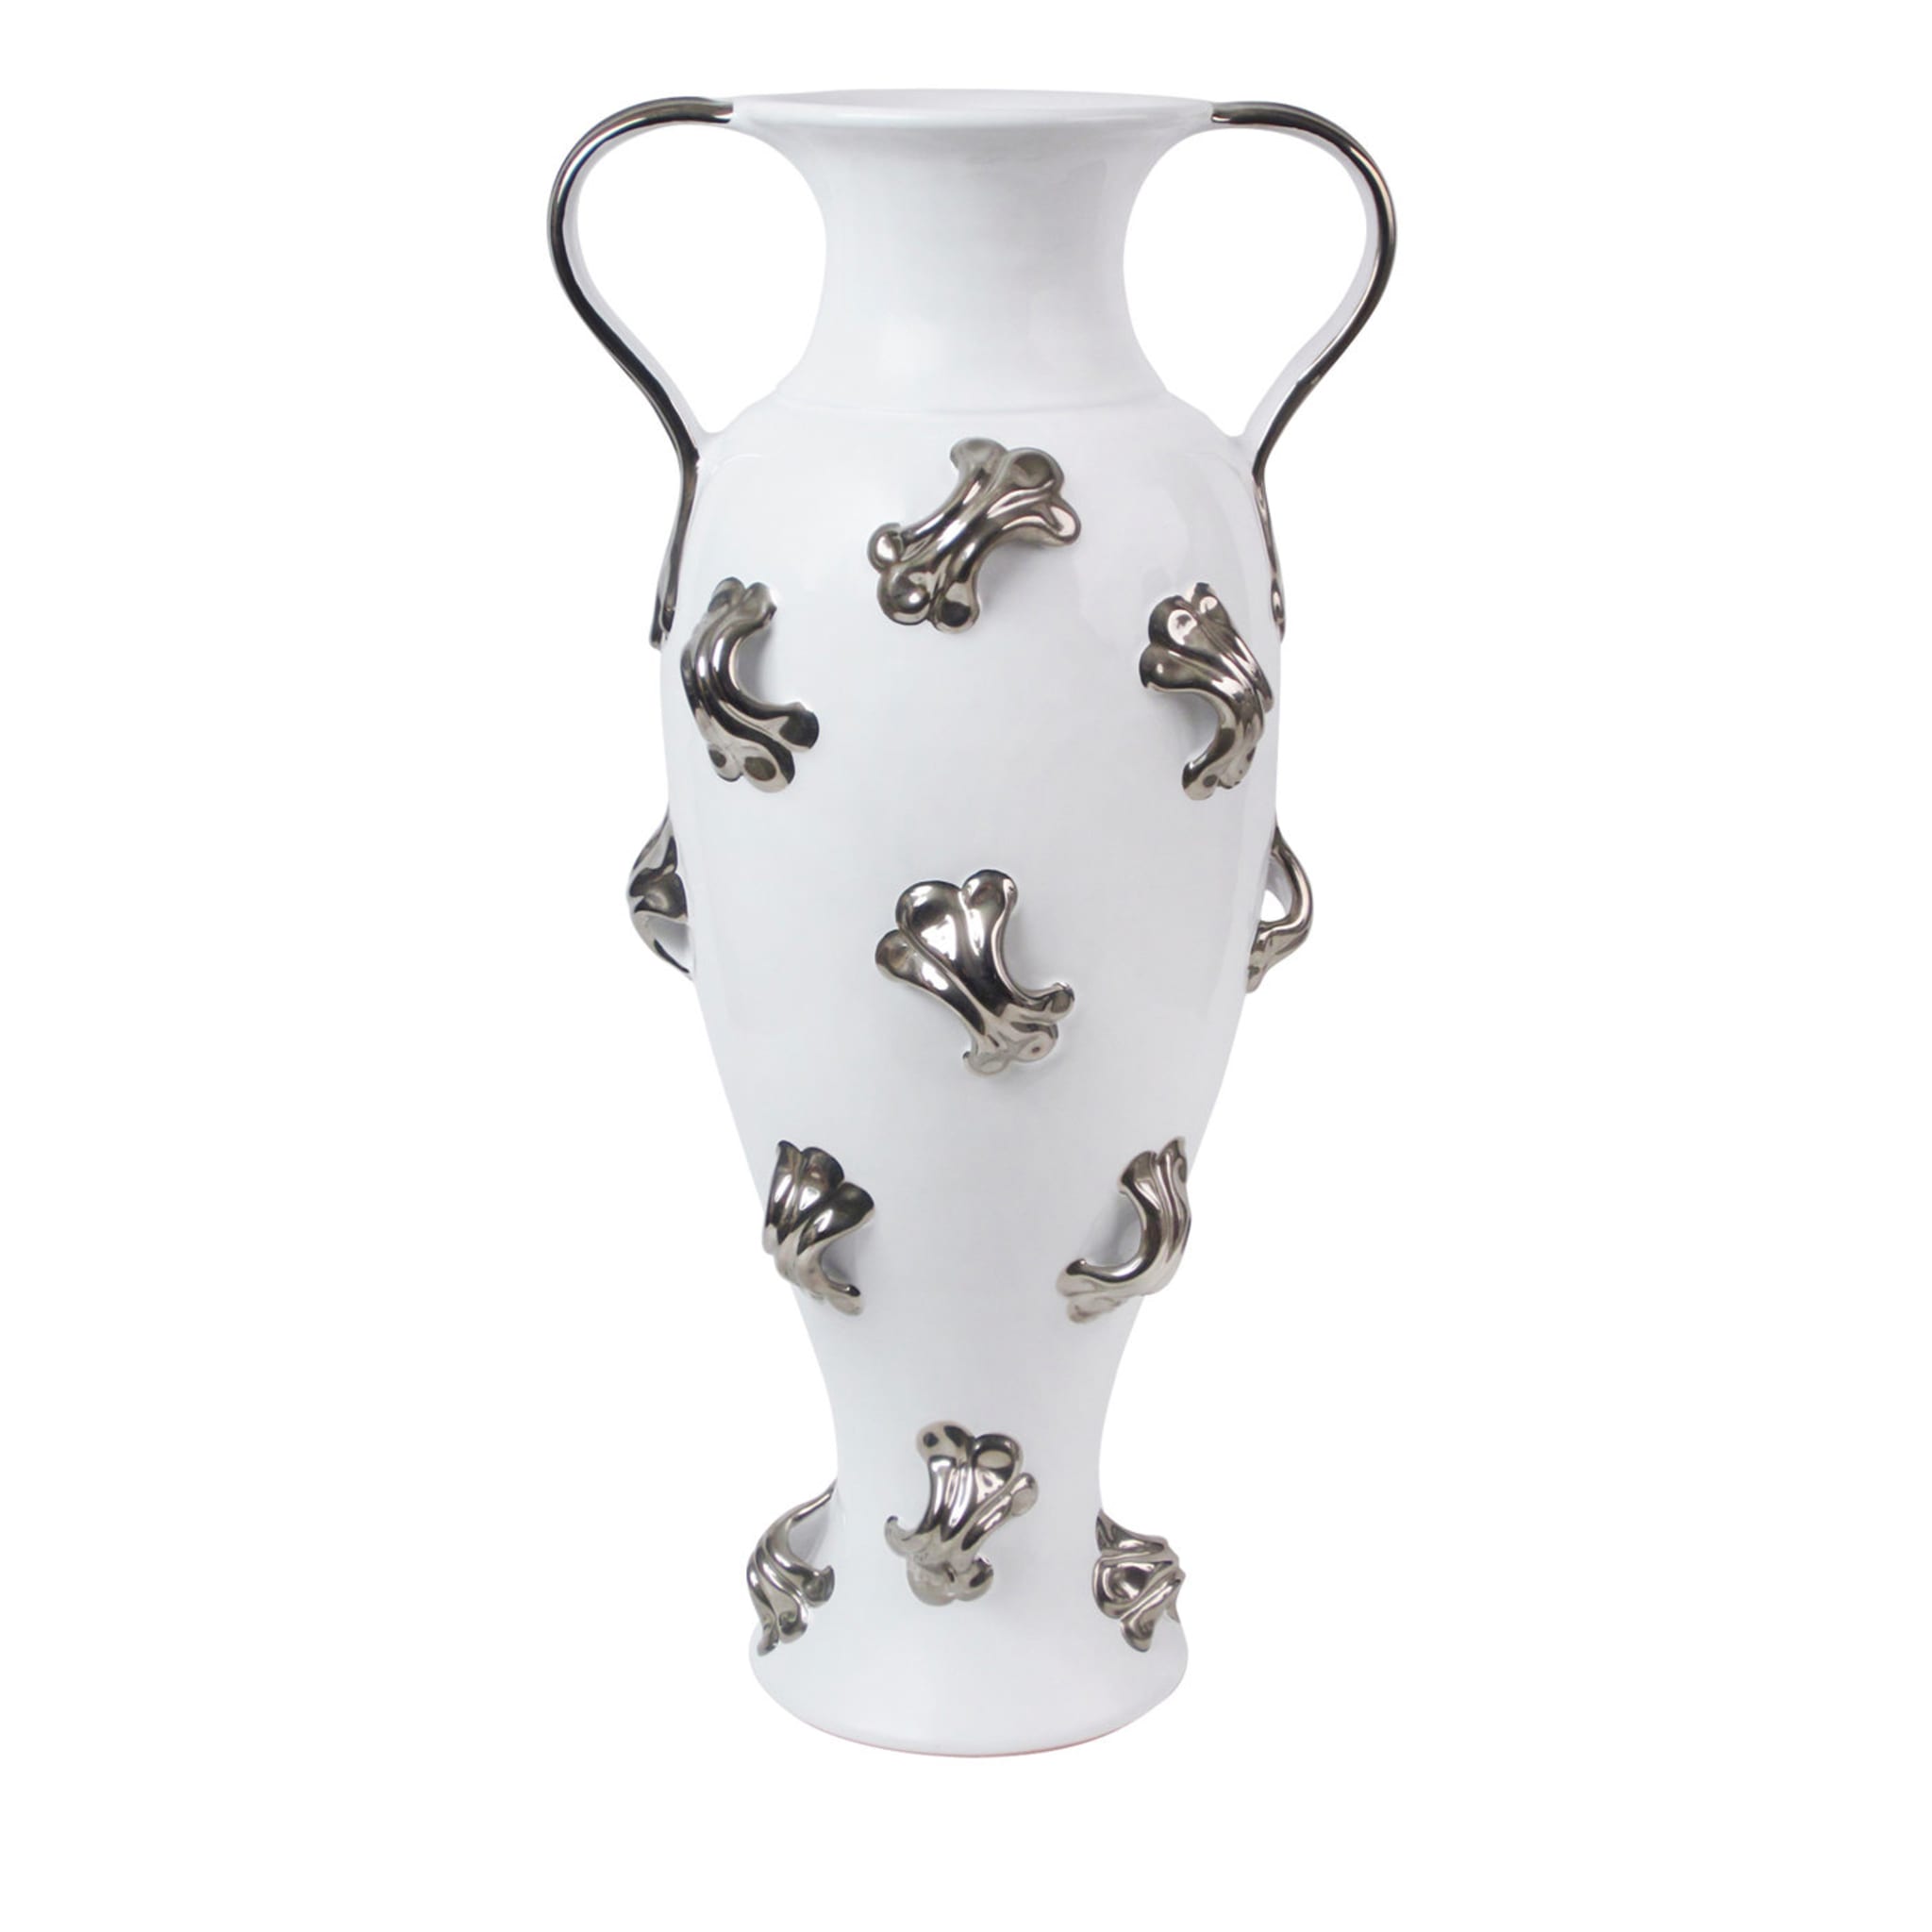 Sphaera Amphora Platin-Vase - Hauptansicht